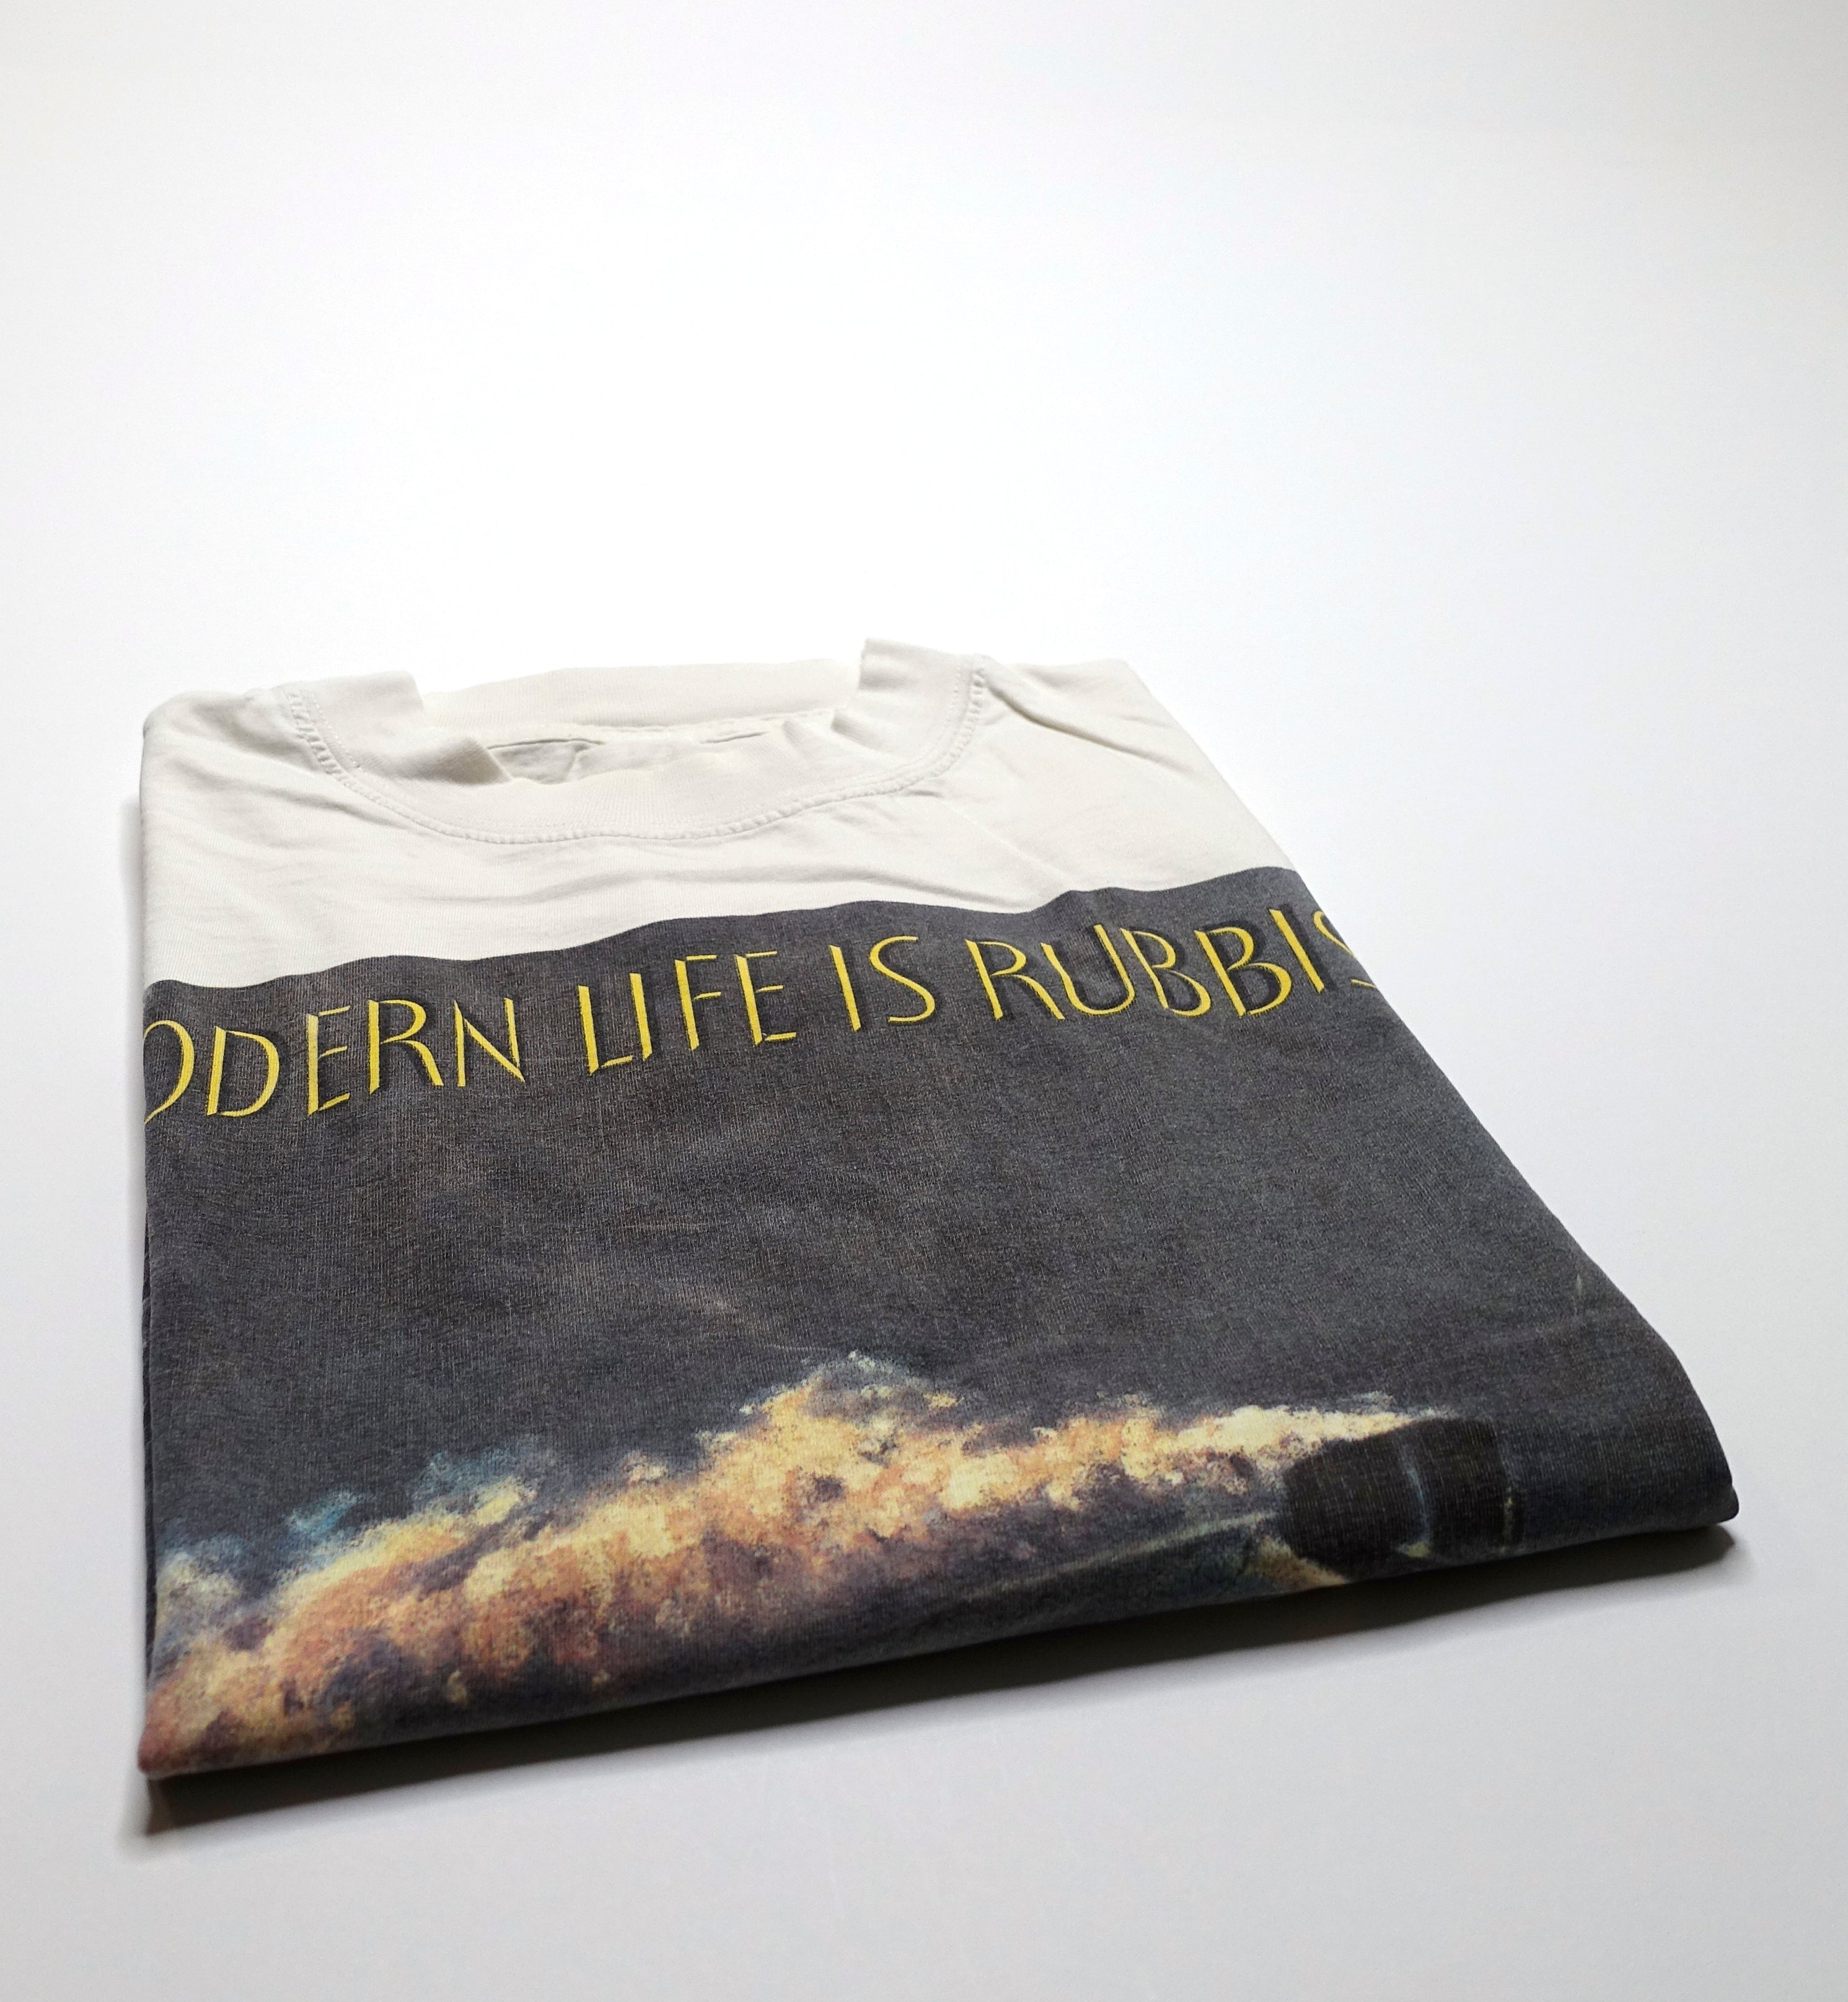 Blur ‎– Modern Life Is Rubbish 1993 UK Tour Shirt Size XL